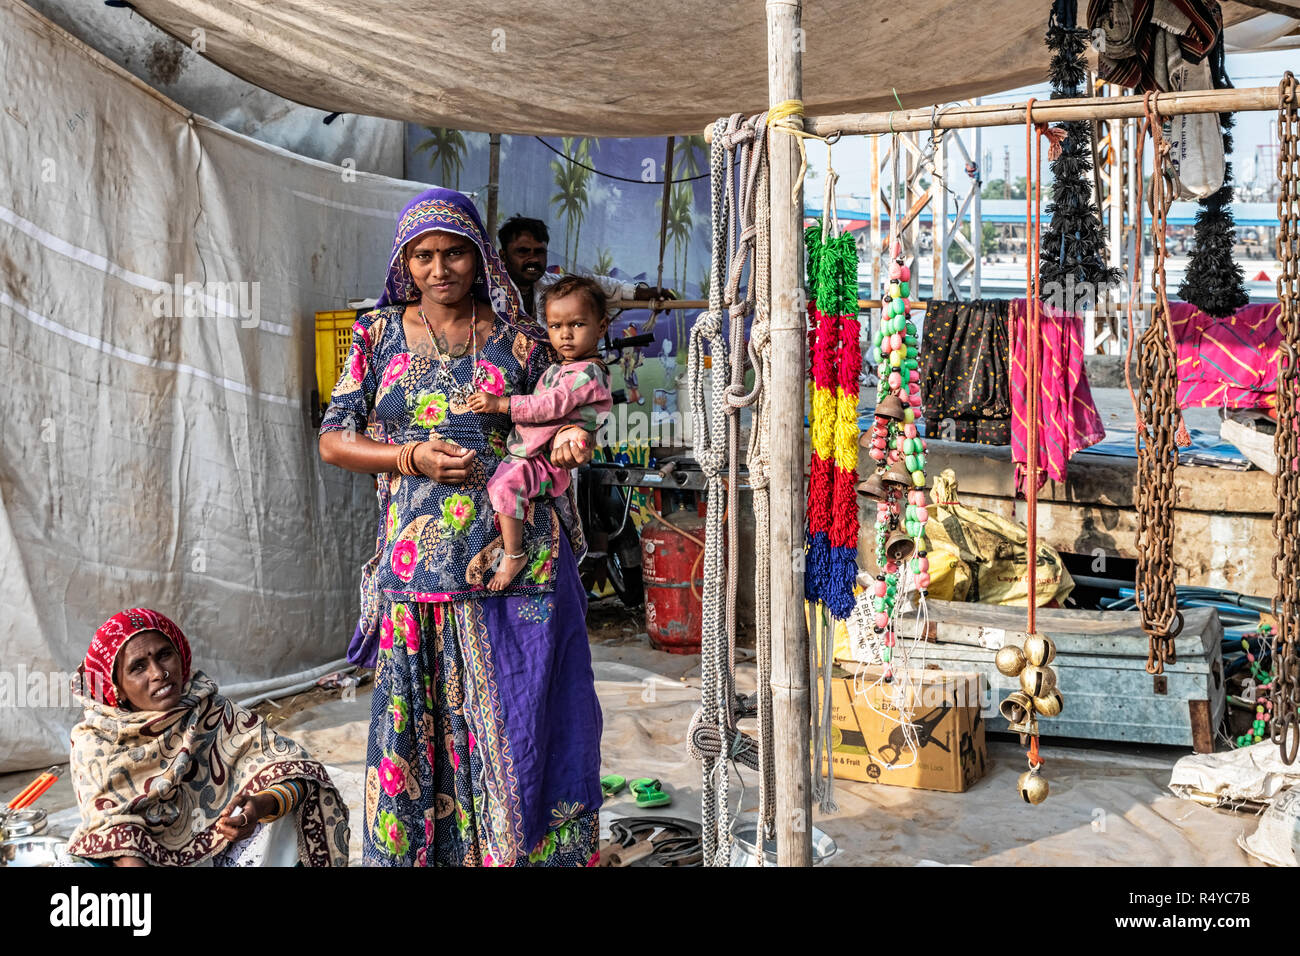 Pushkar, India - Nov 15, 2018: Local woman selling goods at street stand during fair in Pushkar, India Stock Photo